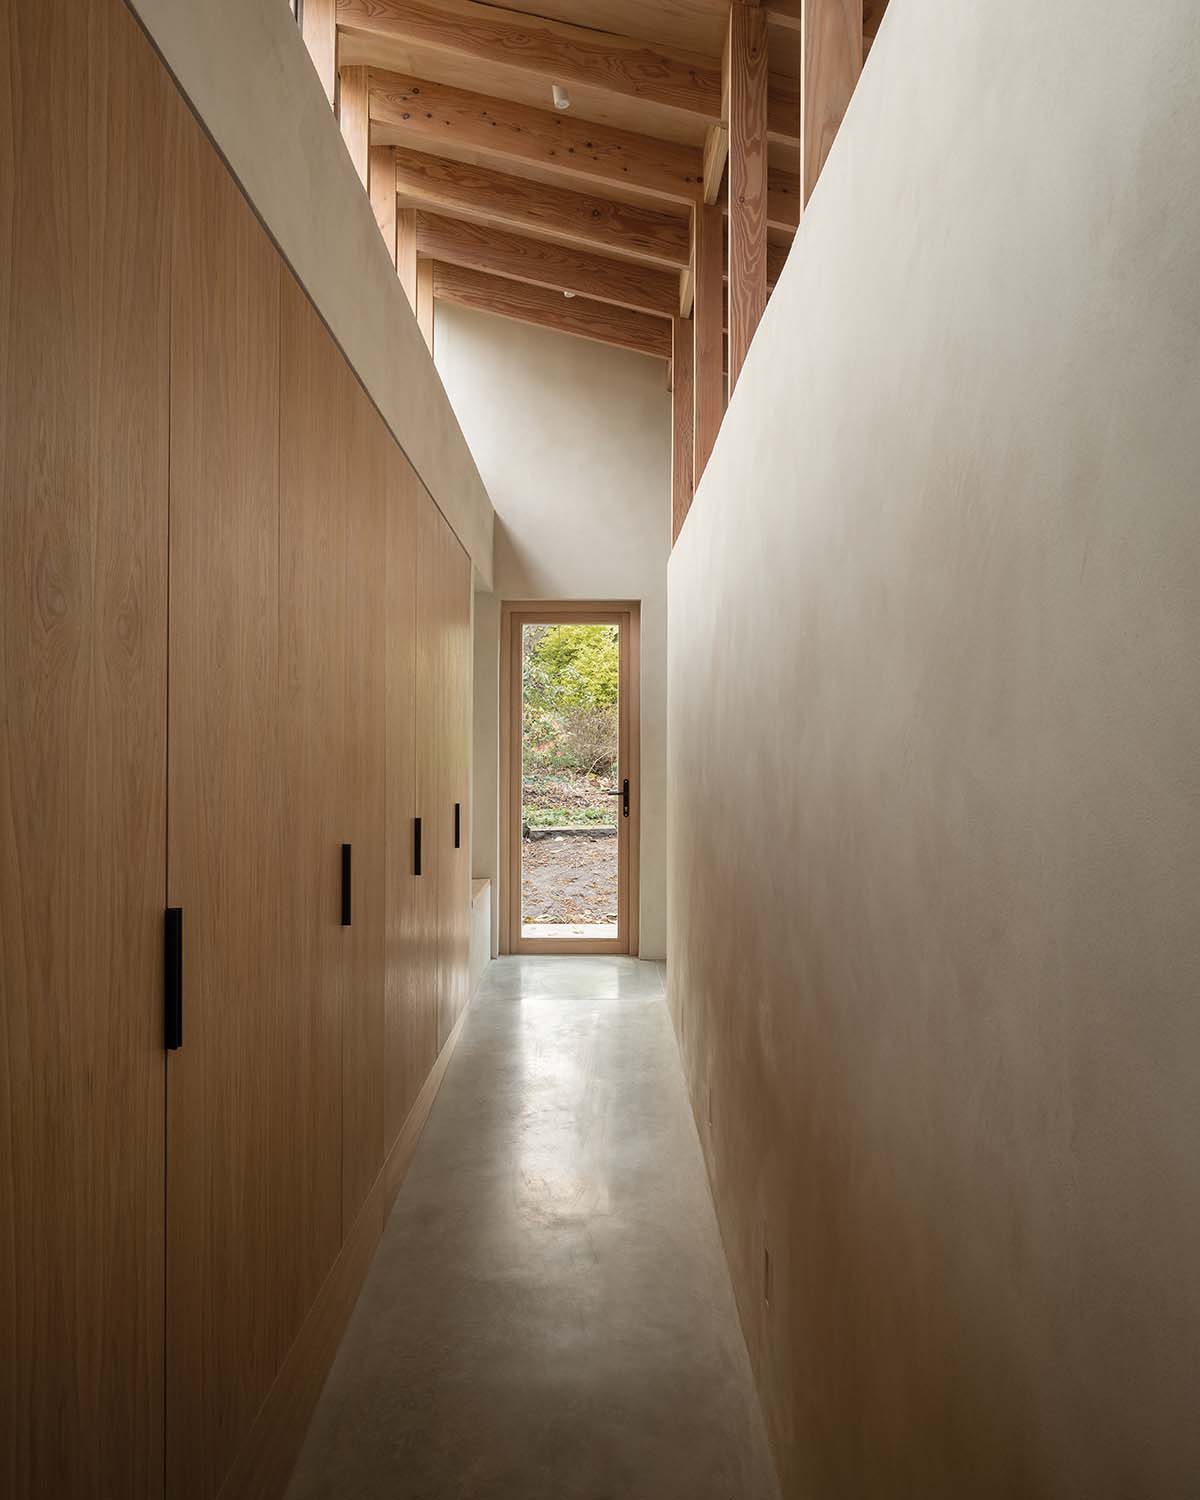 A corridor in an accessible purpose-built home 